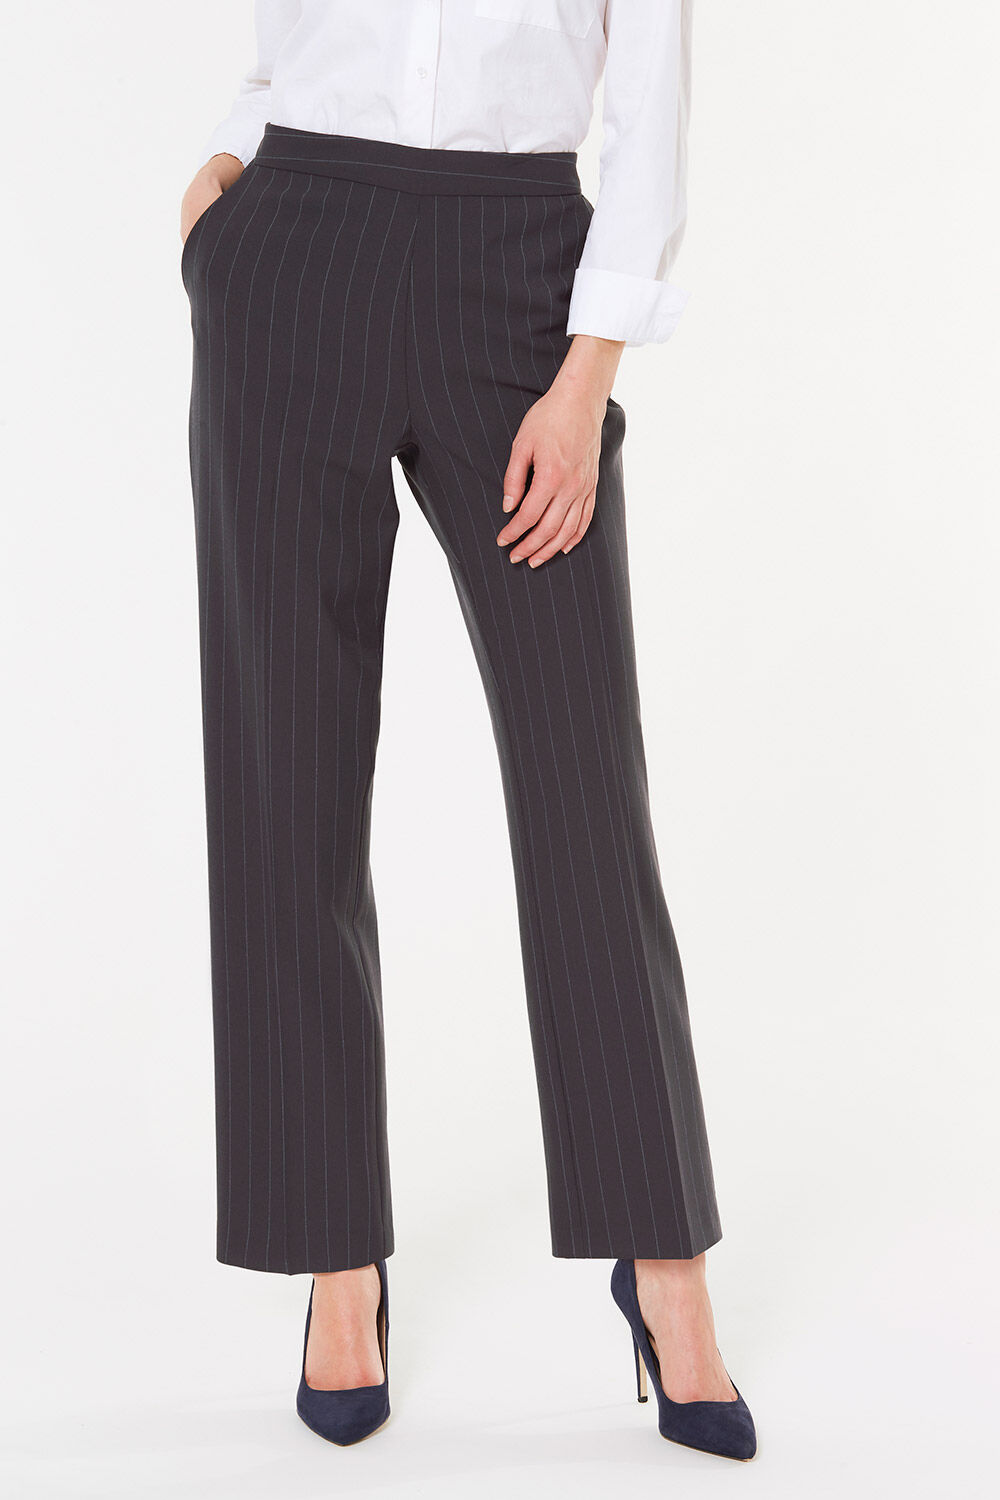 Bonmarche Workwear Straight Leg Stripe Pull On Trouser - Navy, Size: 12